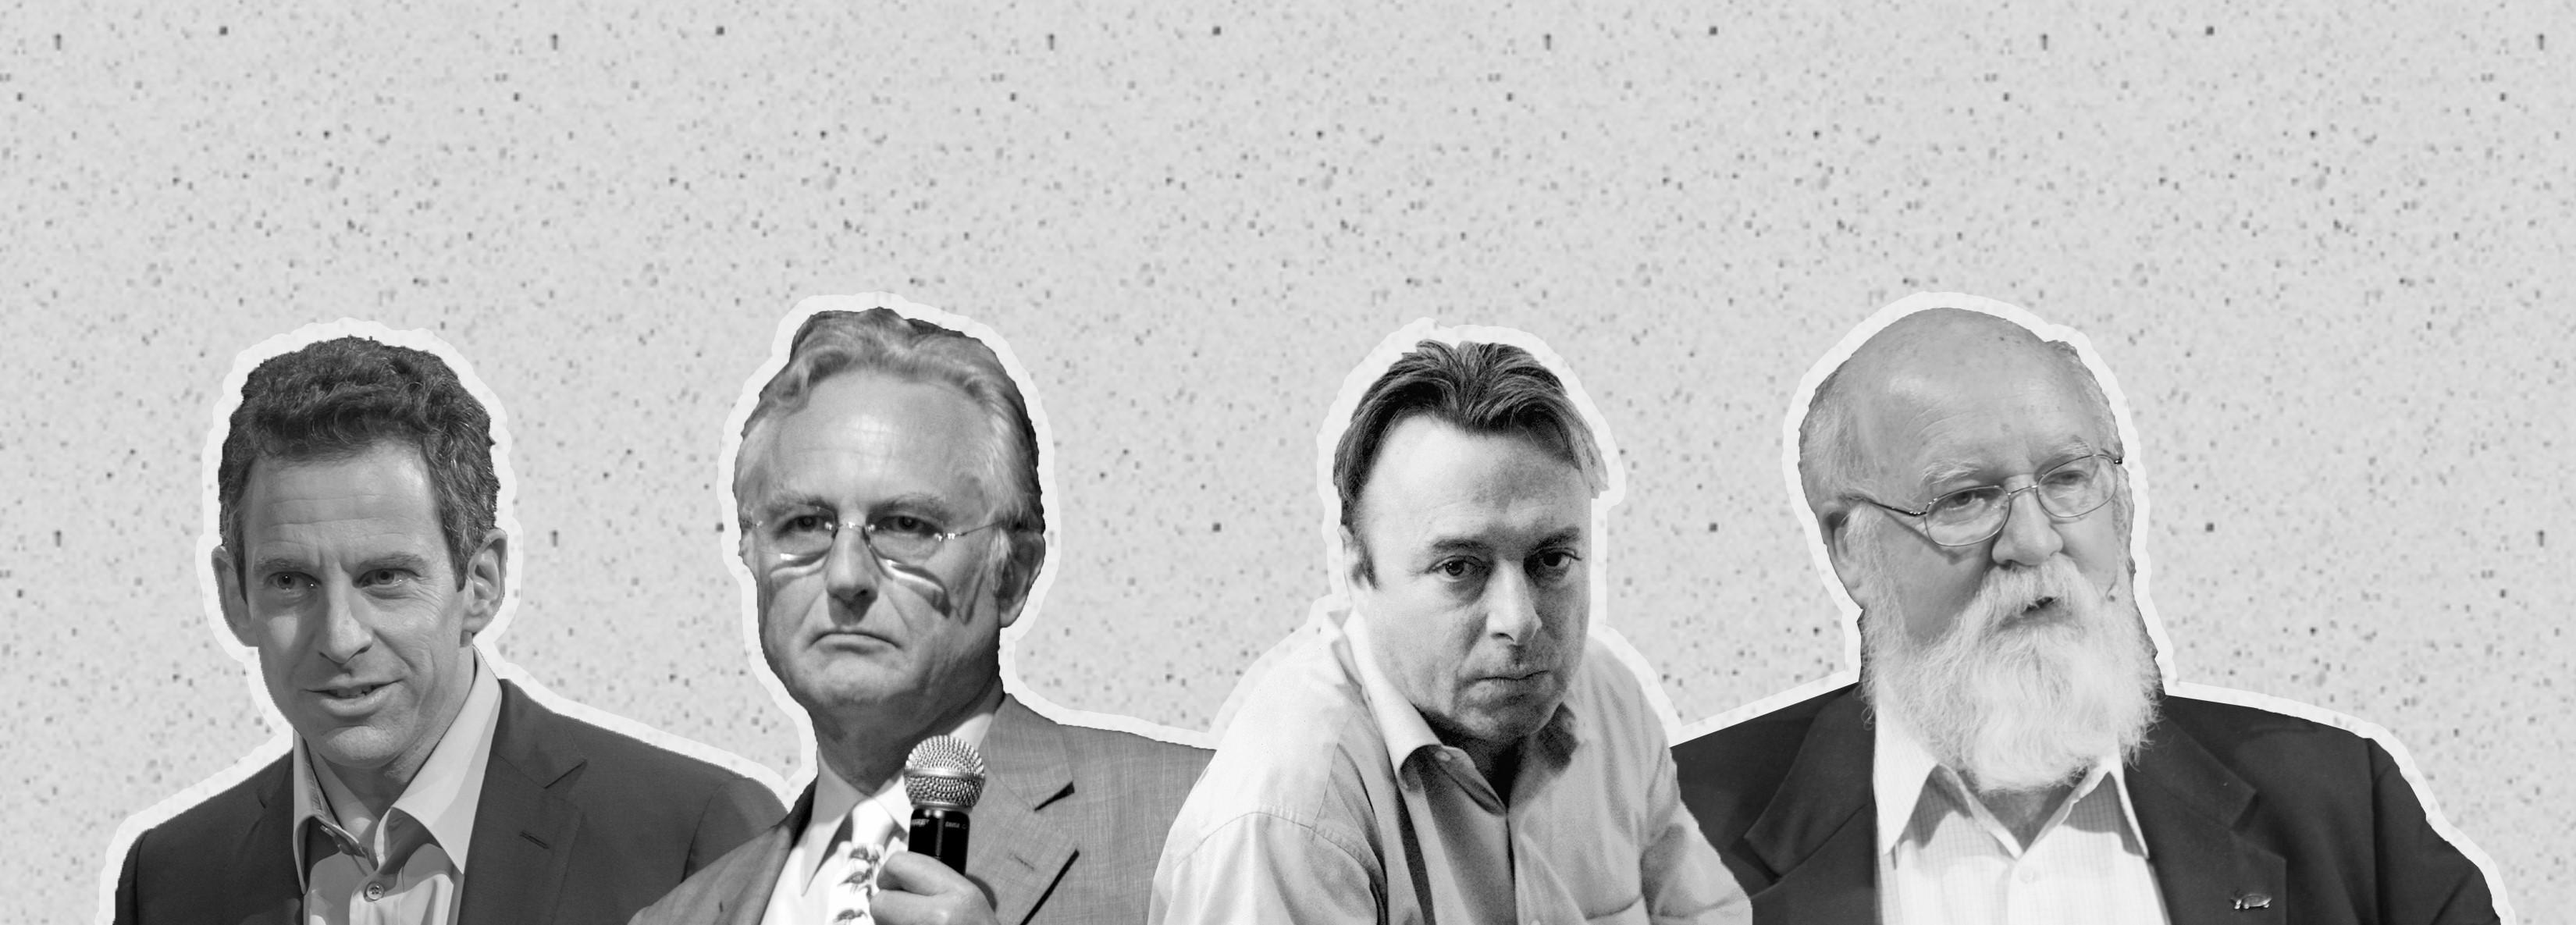 Image of Sam Harris, Richard Dawkins, Christopher Hitchens, Daniel Dennett